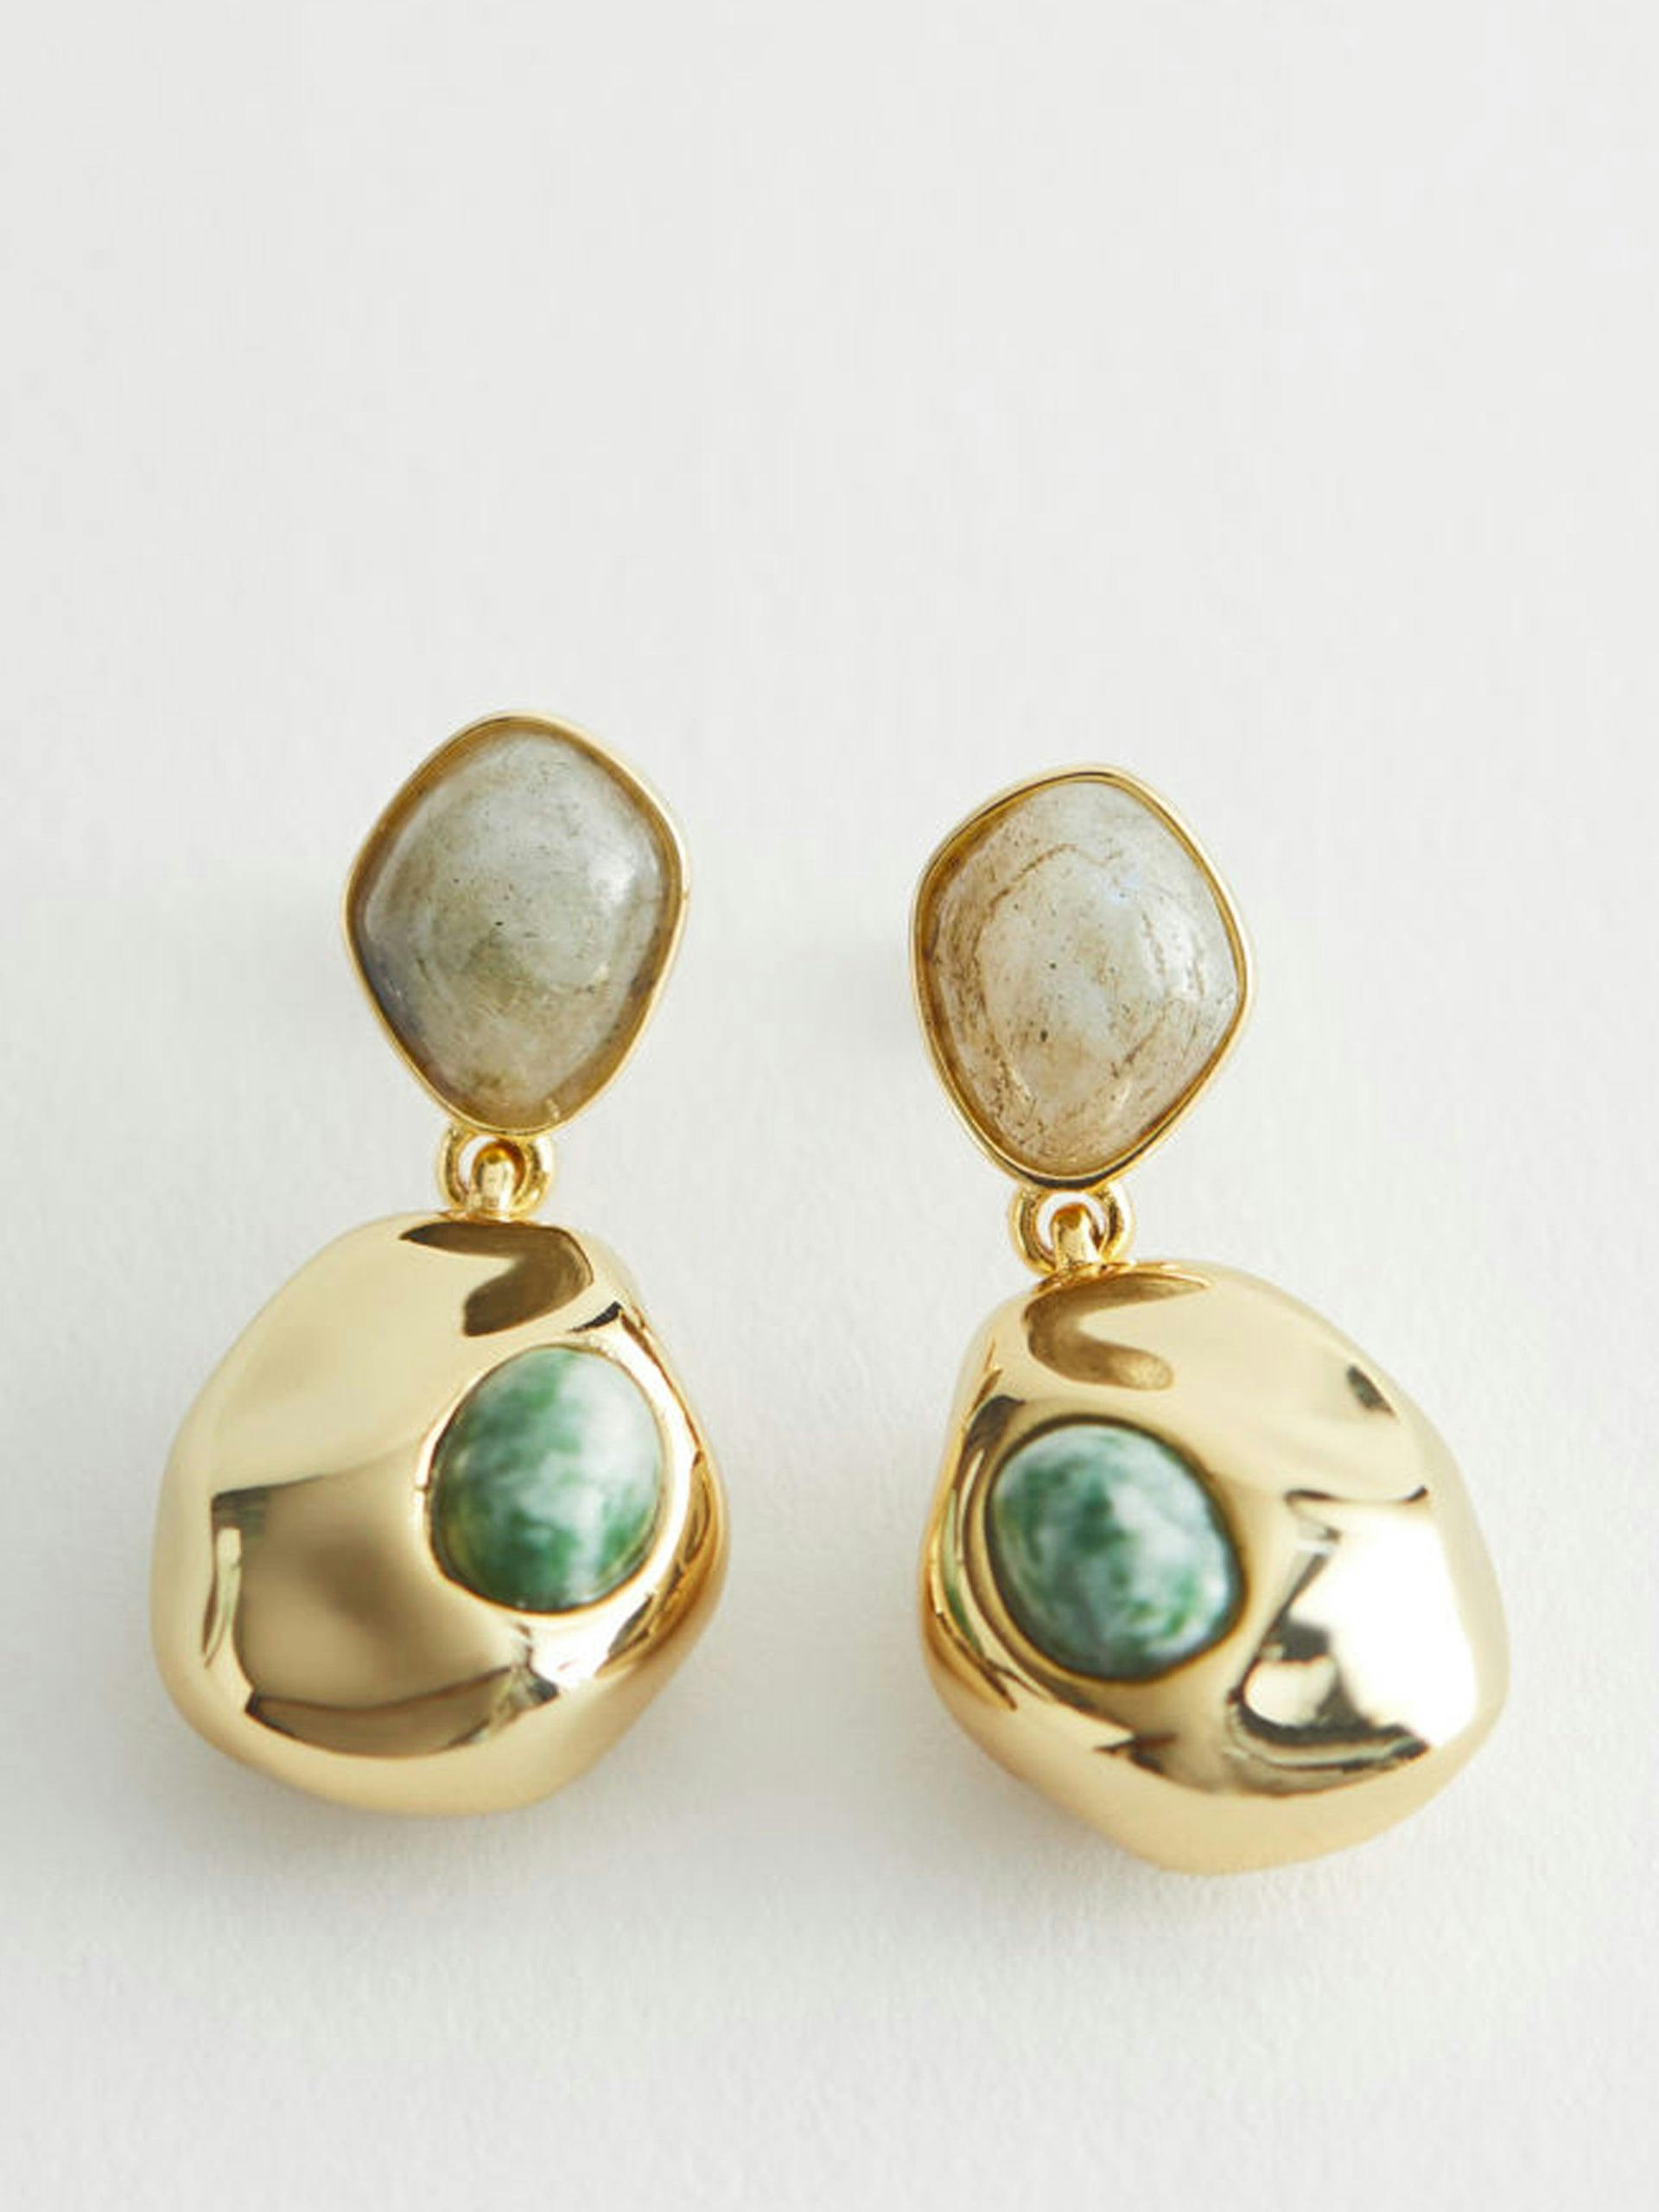 Stone pendant earrings